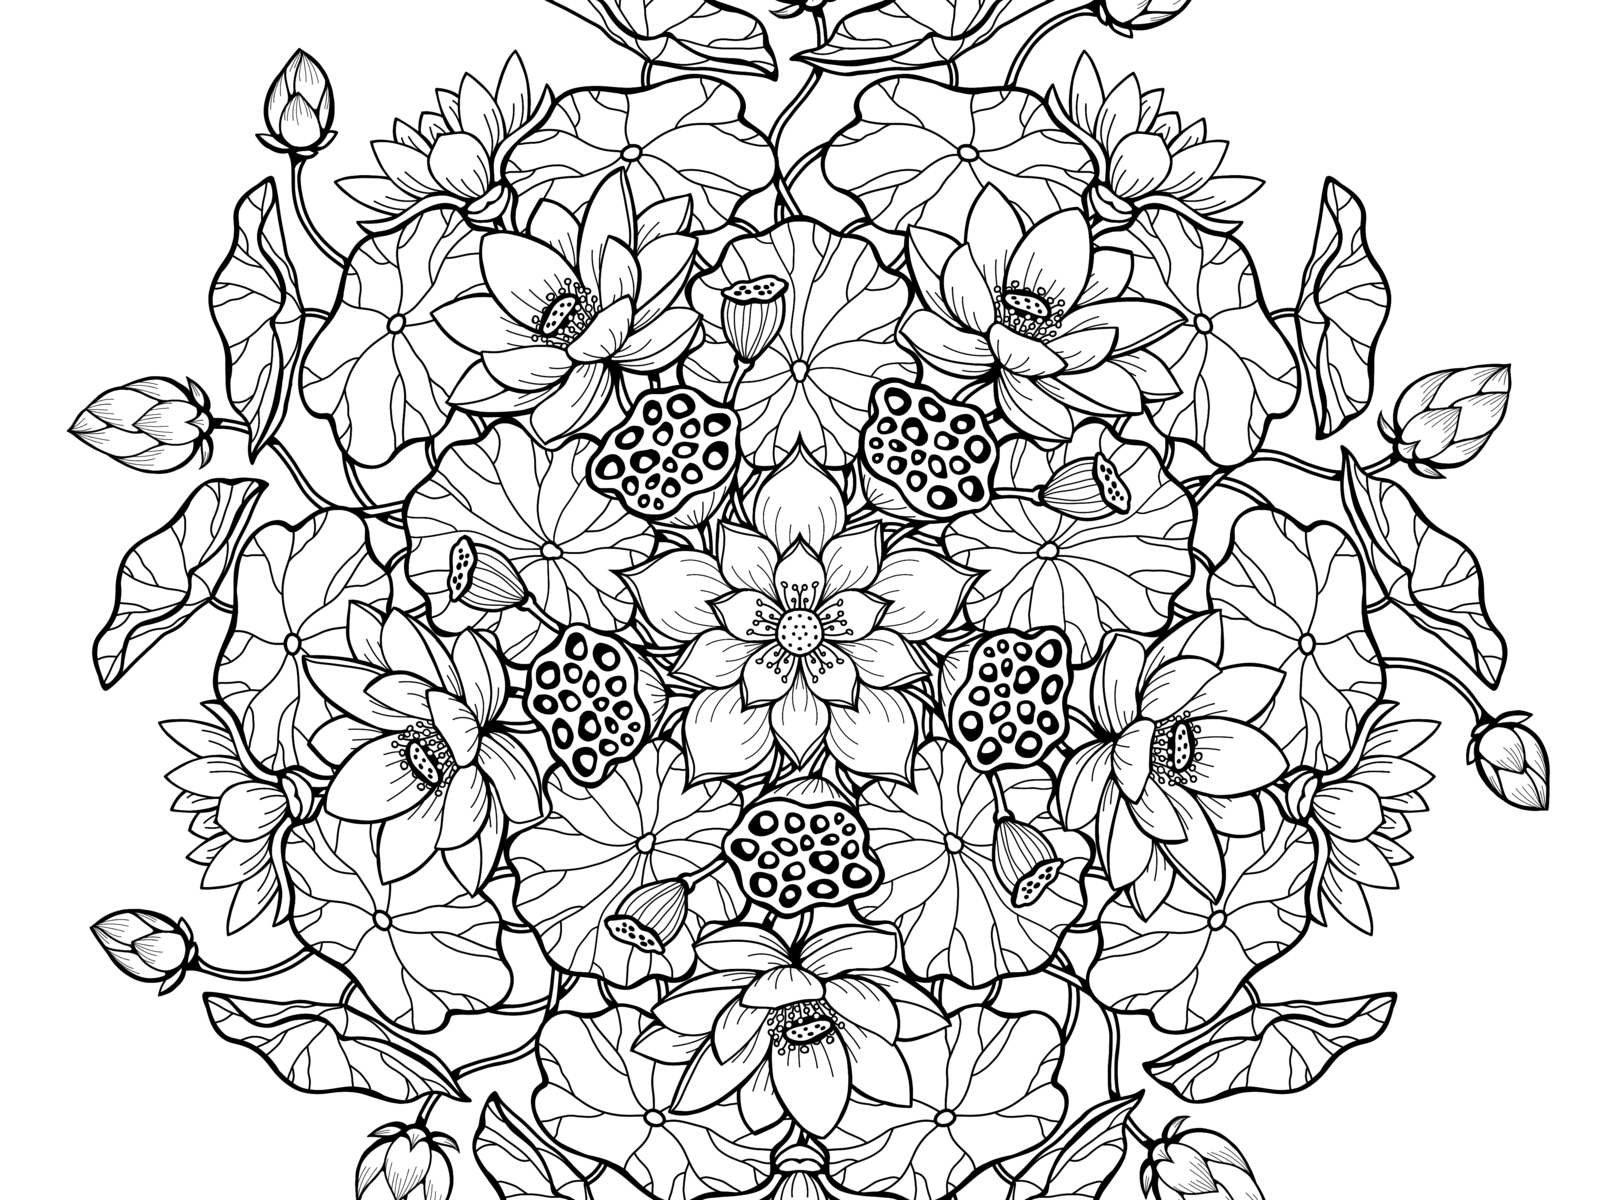 Lotus Mandala by Katerina Pushkina on Dribbble